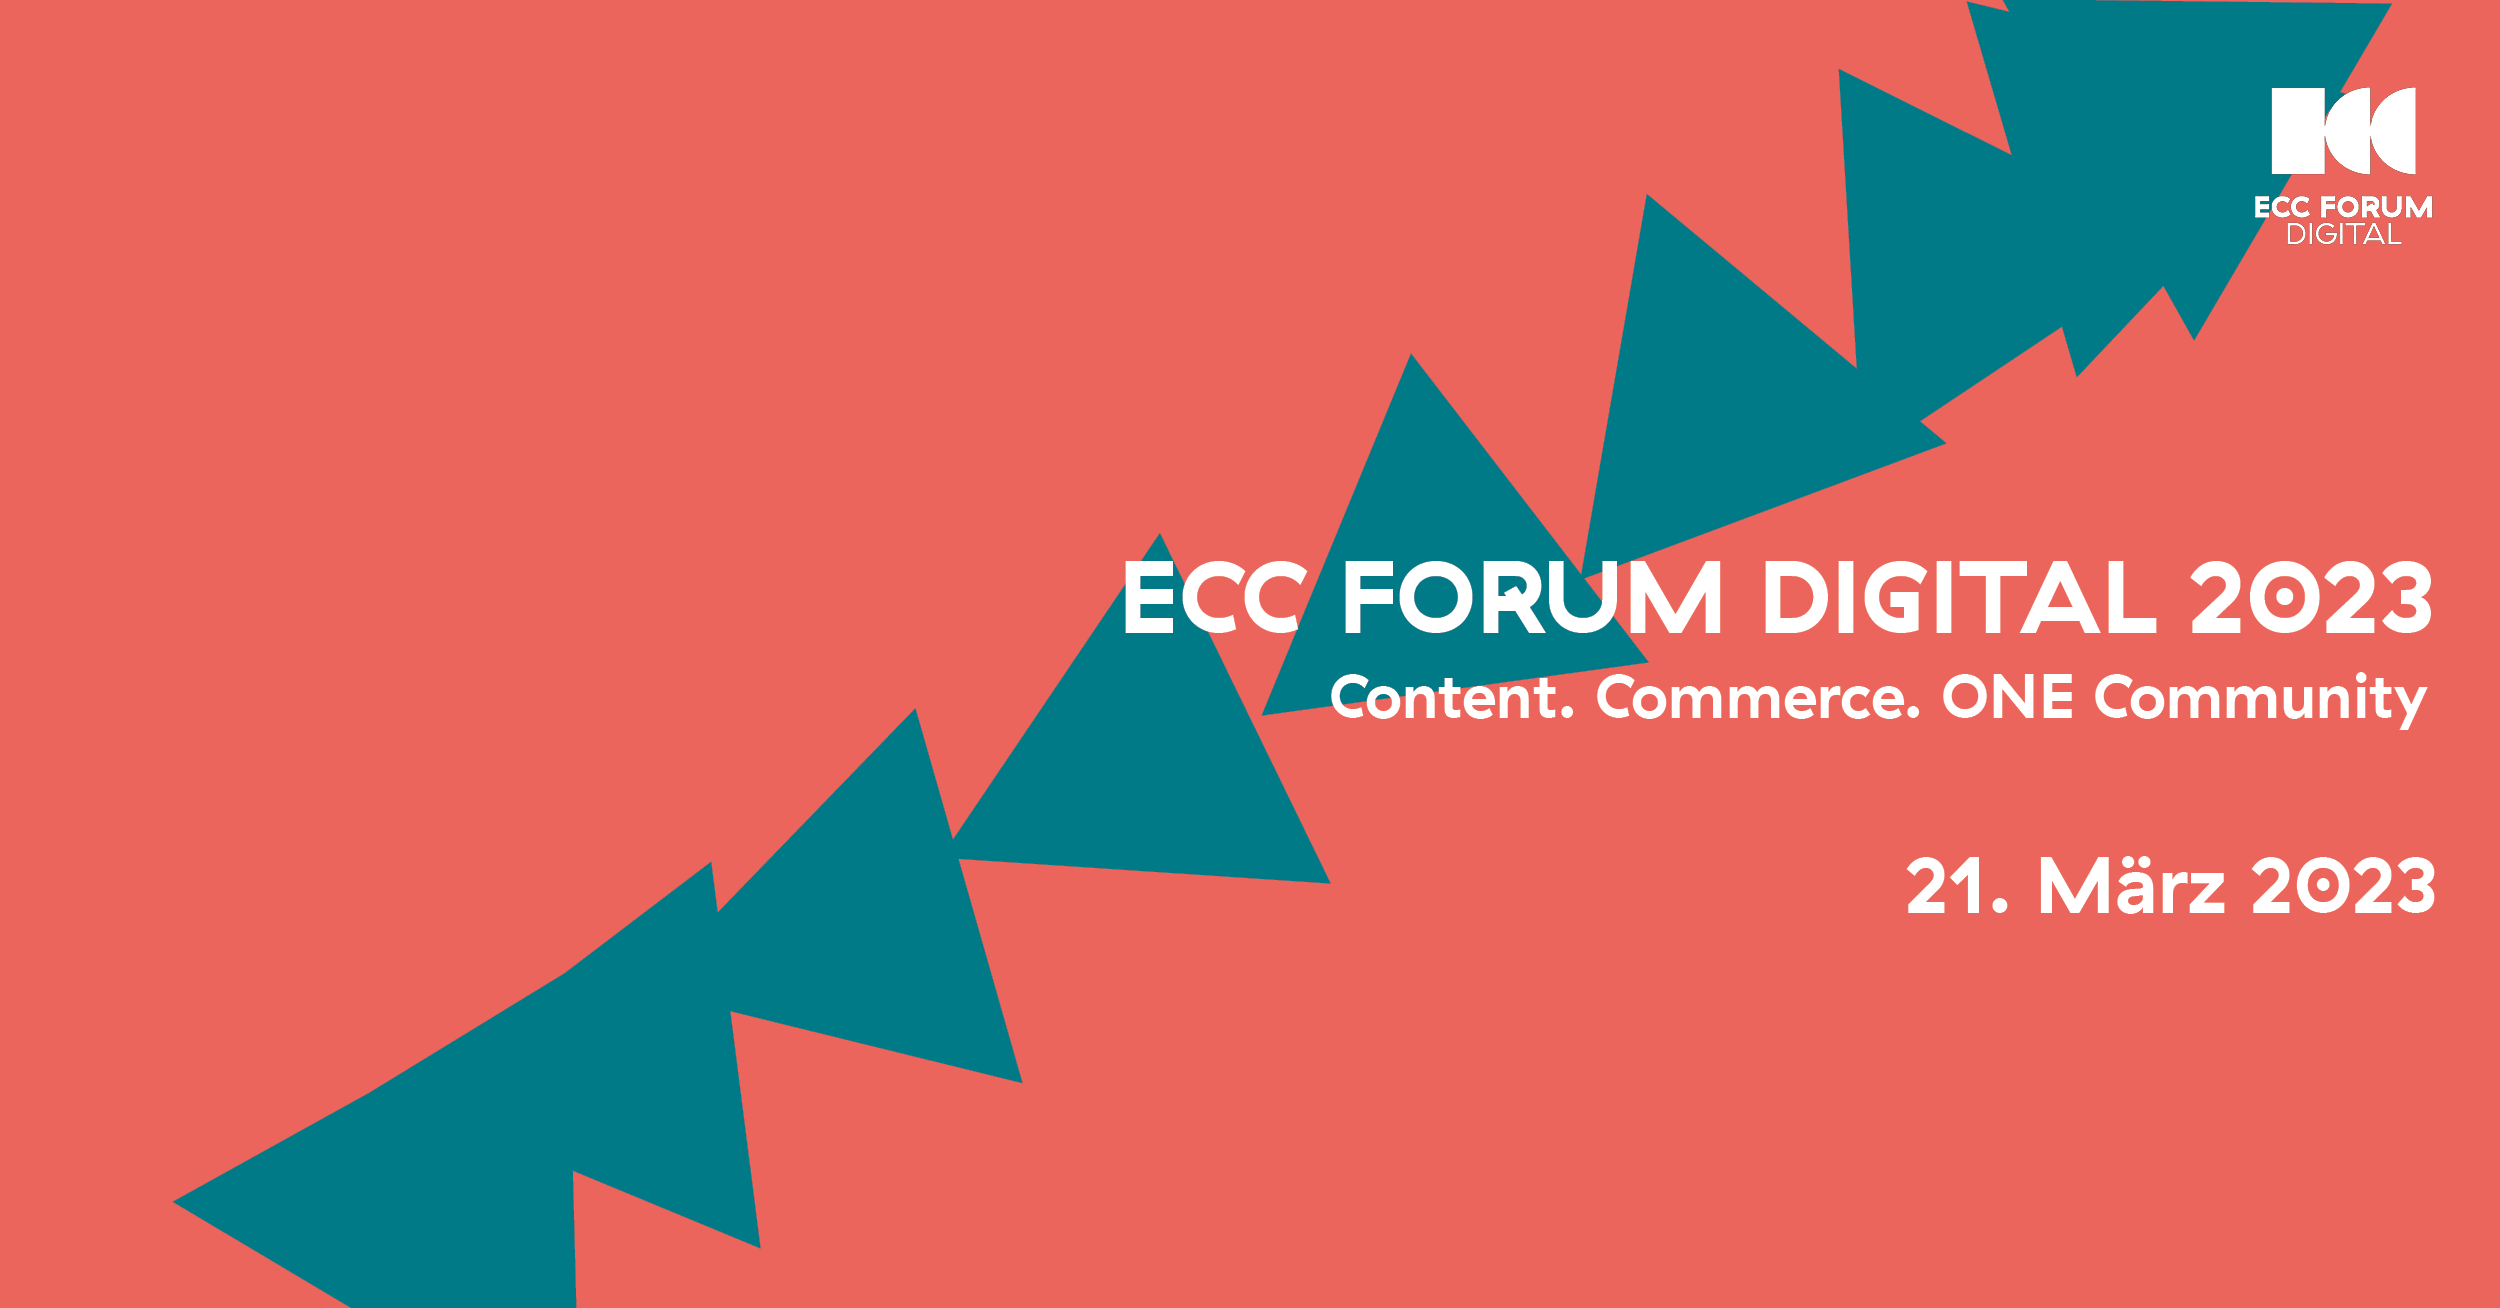 Grafik zur Ankündigung des ECC FORUM DIGITAL am 21. März 2023.